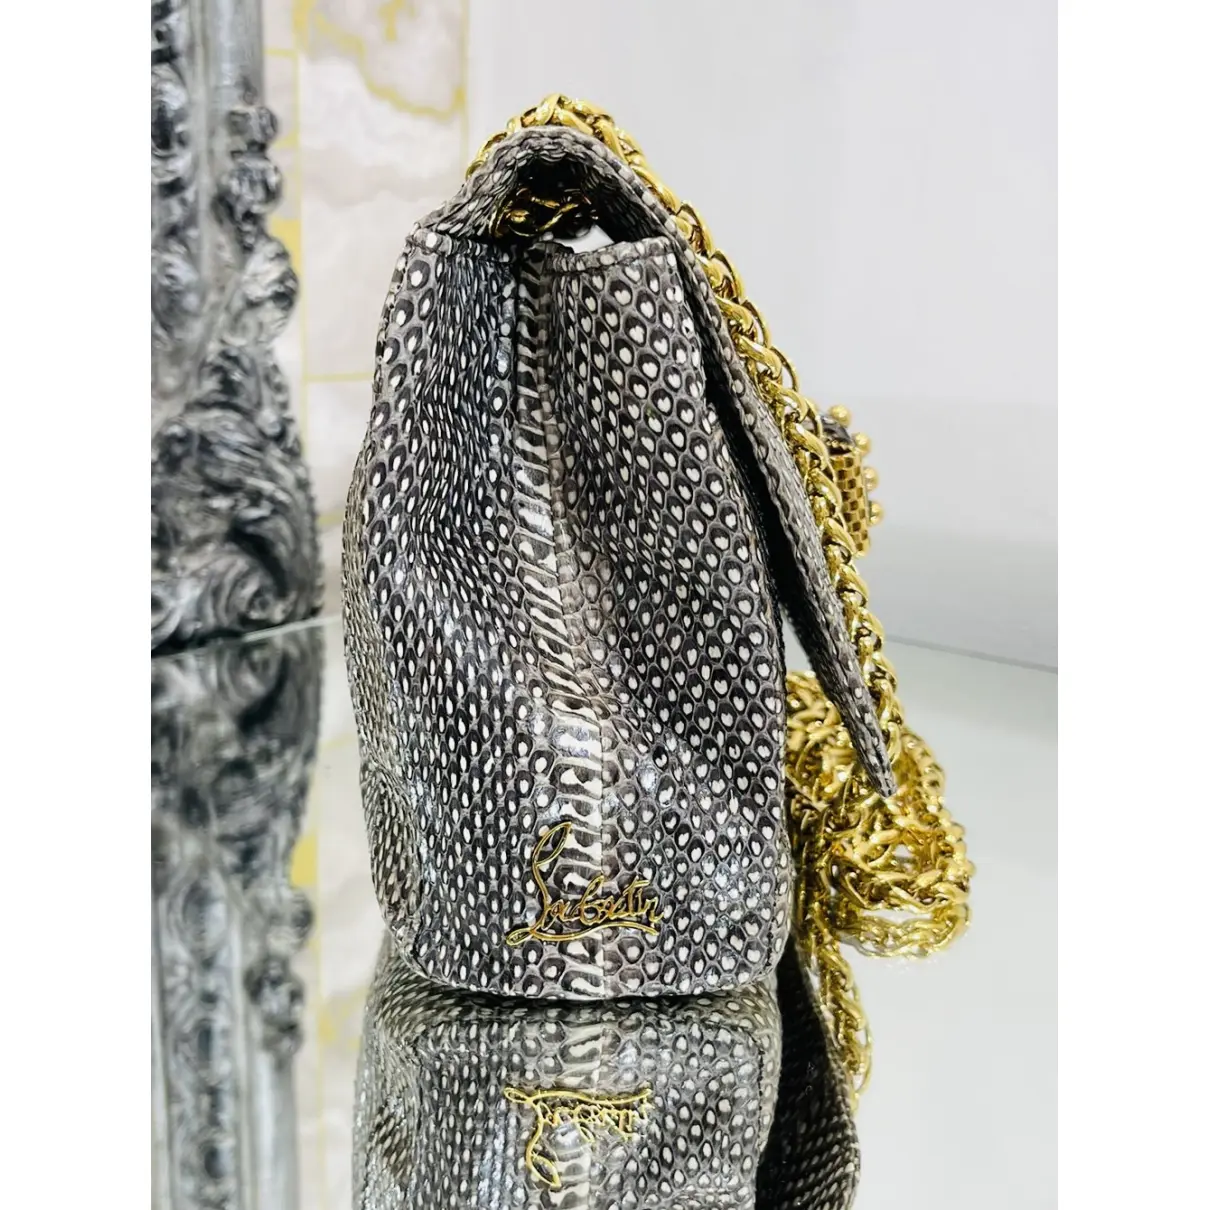 Luxury Christian Louboutin Handbags Women